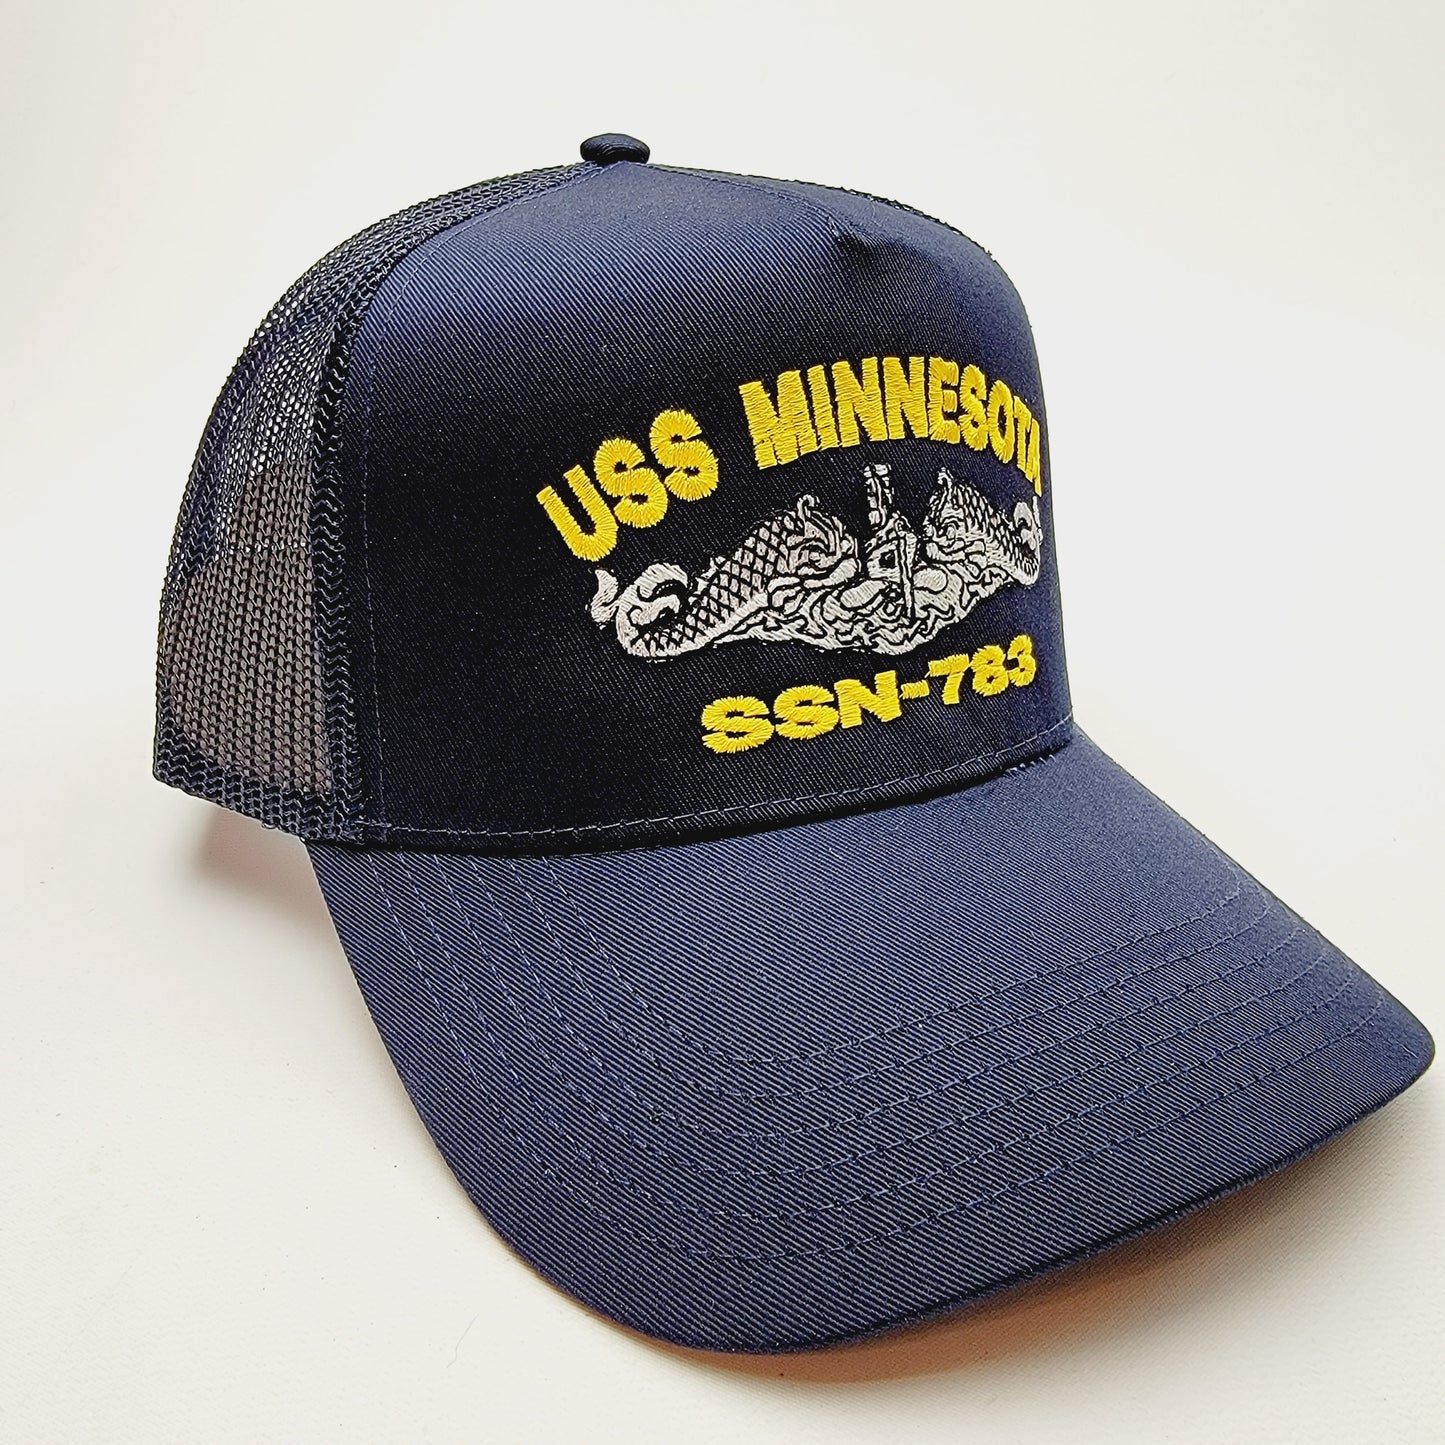 US NAVY USS MINNESOTA SSN-783 Embroidered Hat Baseball Cap Adjustable Blue